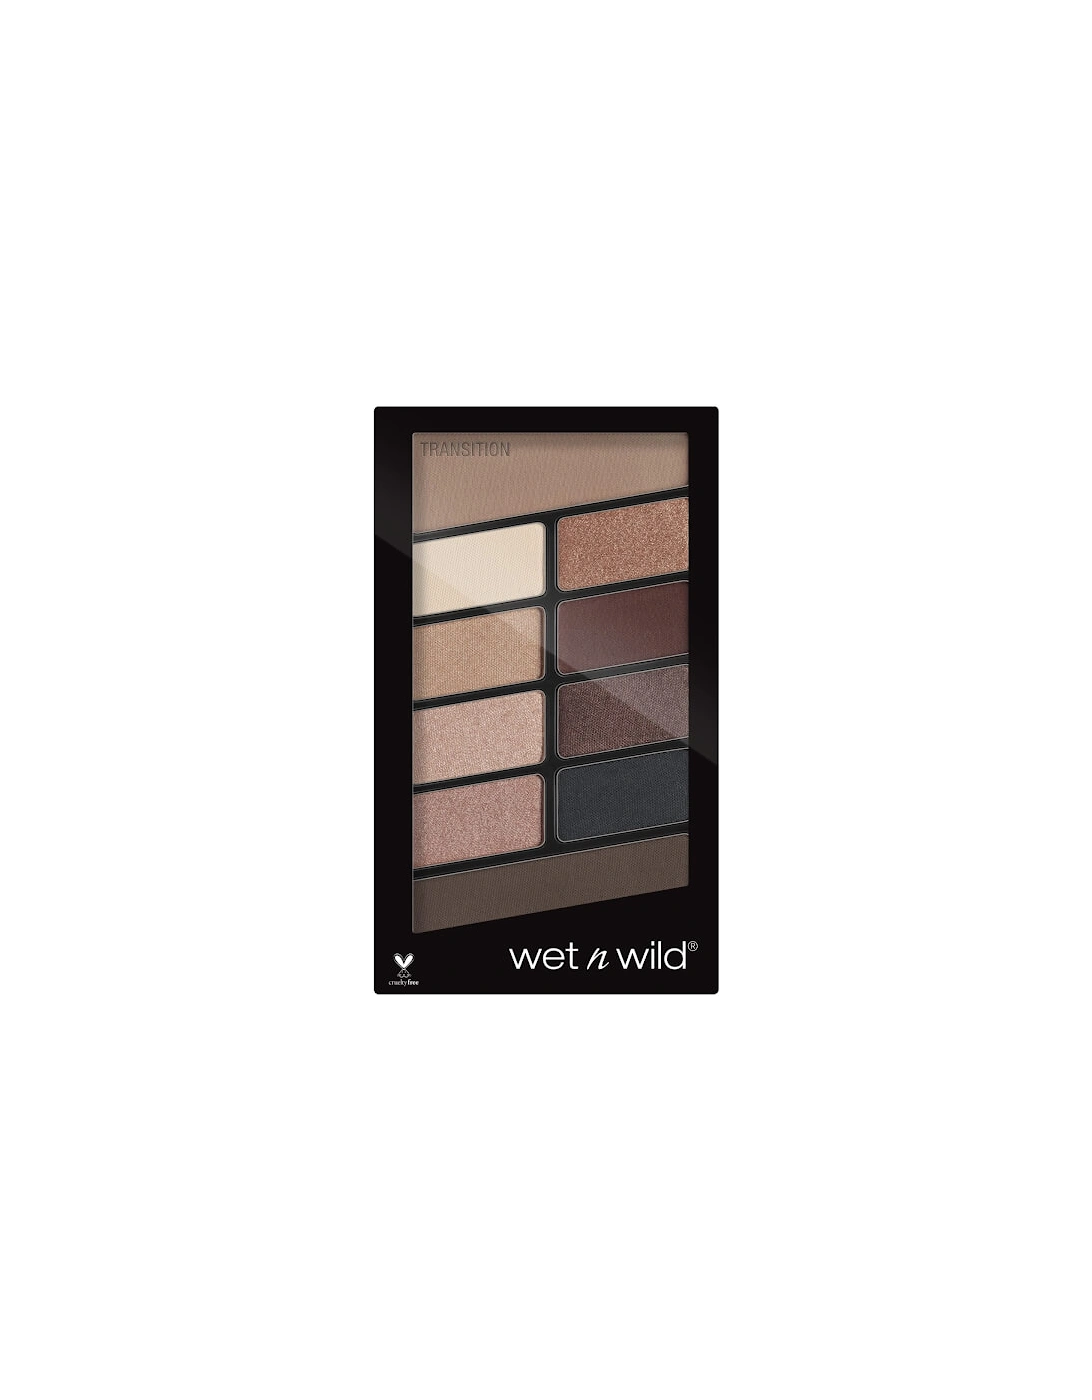 wet n wild coloricon 10 Pan Palette - Nude Awakening 8.5g, 2 of 1